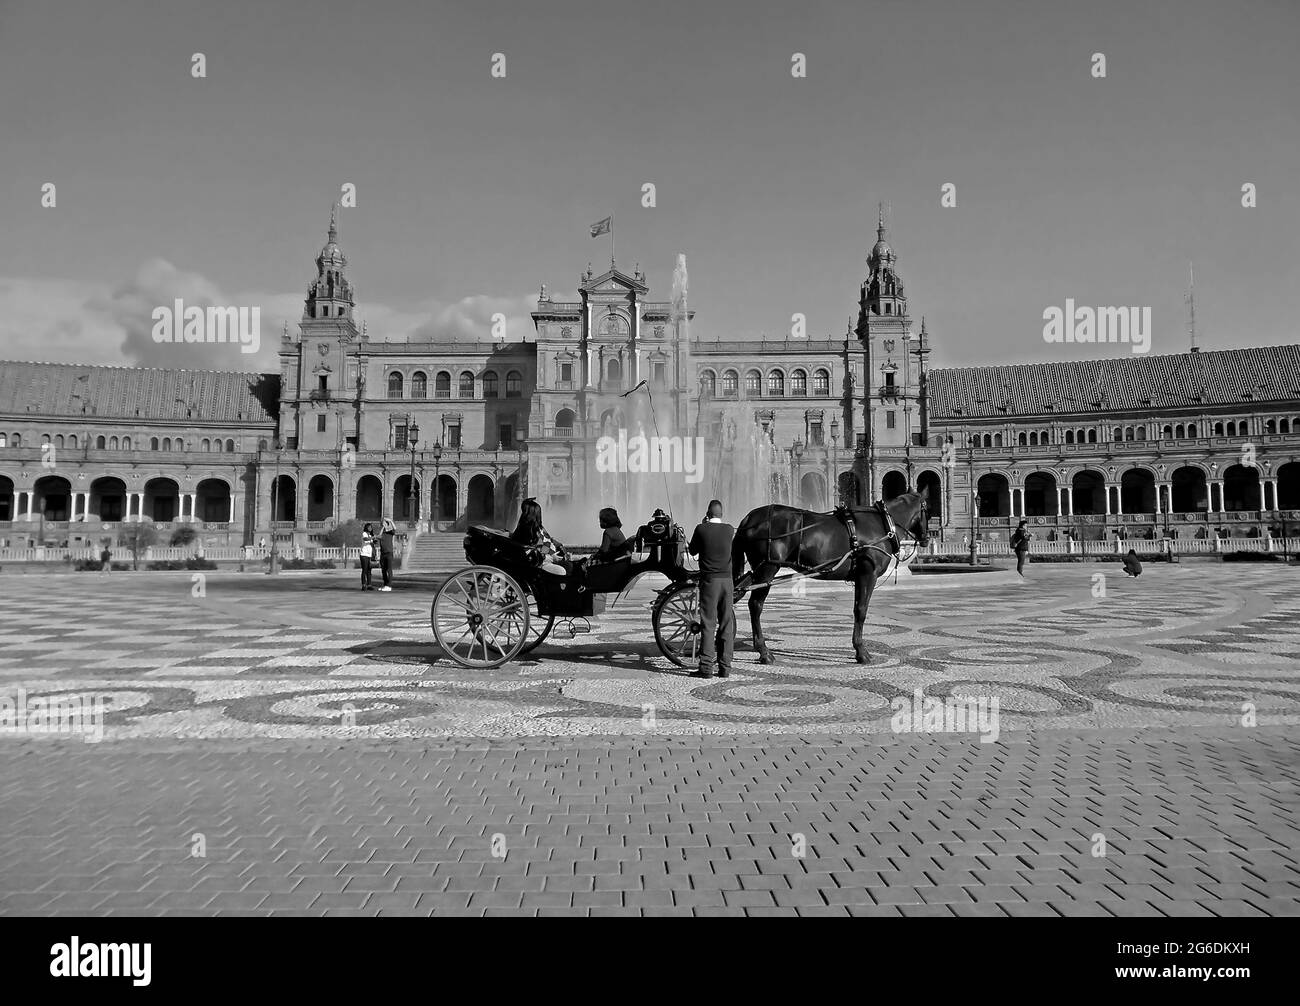 Monochrome Image of Plaza de Espana, the Iconic Gorgeous Landmark of Seville, Spain Stock Photo